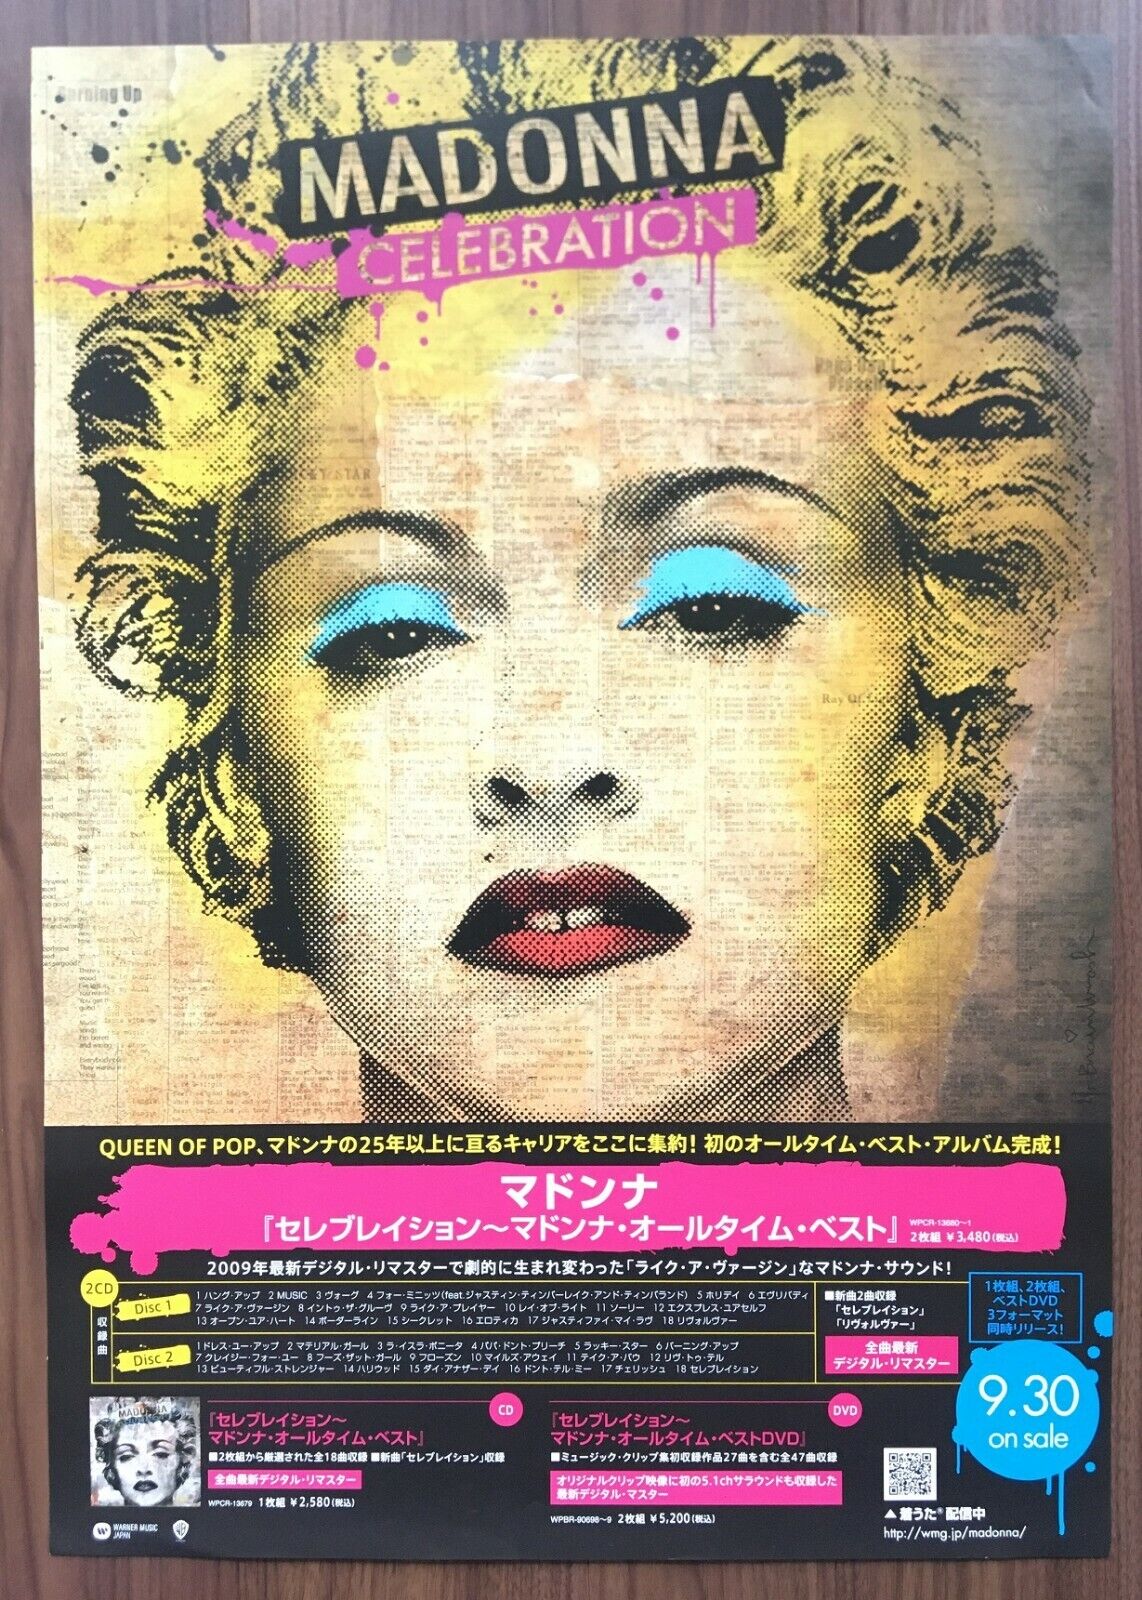 Free Ship! Madonna Japan Promo Poster Celebration More Madonna Posters Listed